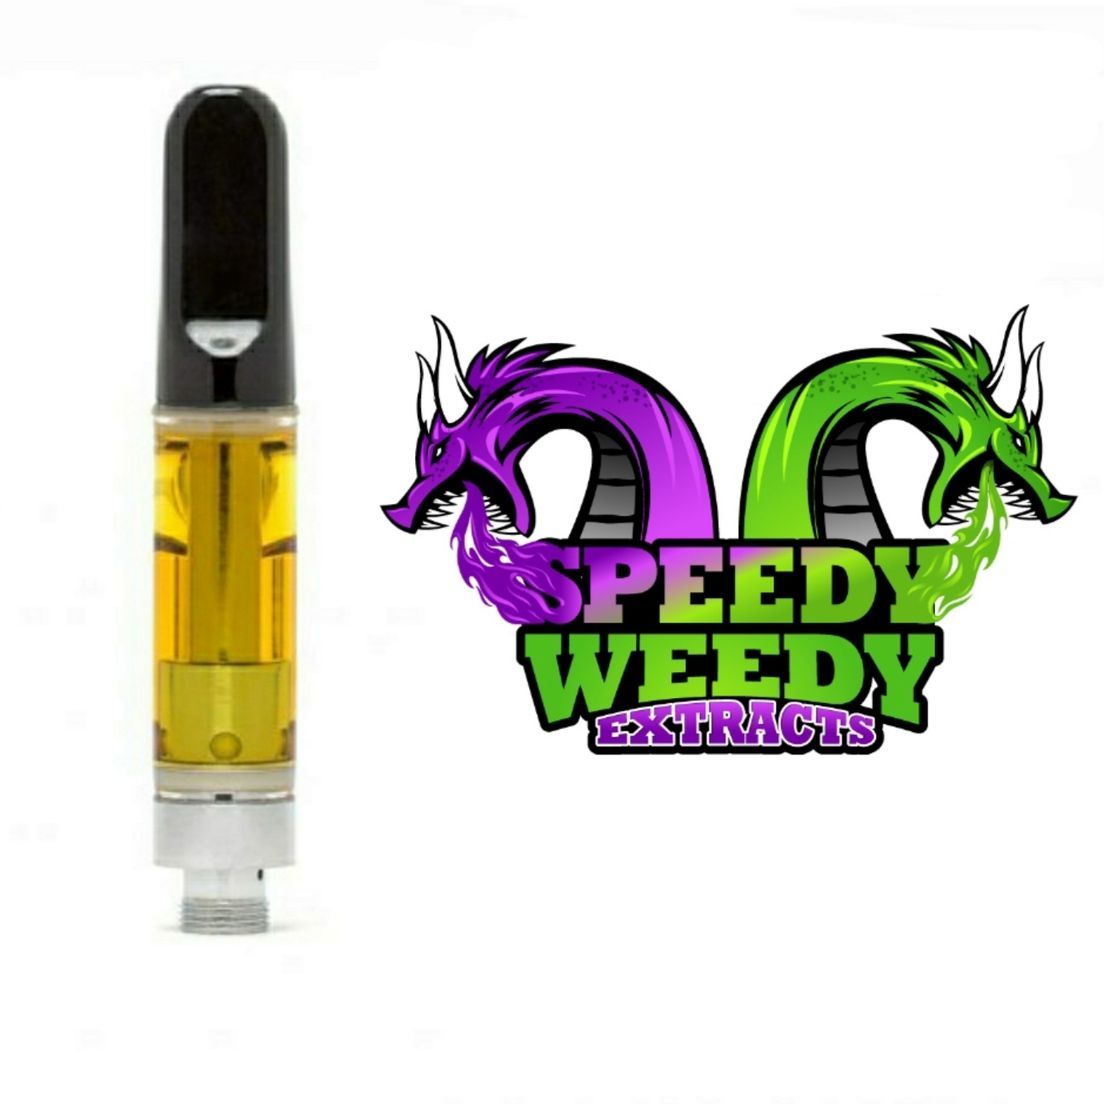 1. Speedy Weedy 1g Cartridge - Runtz